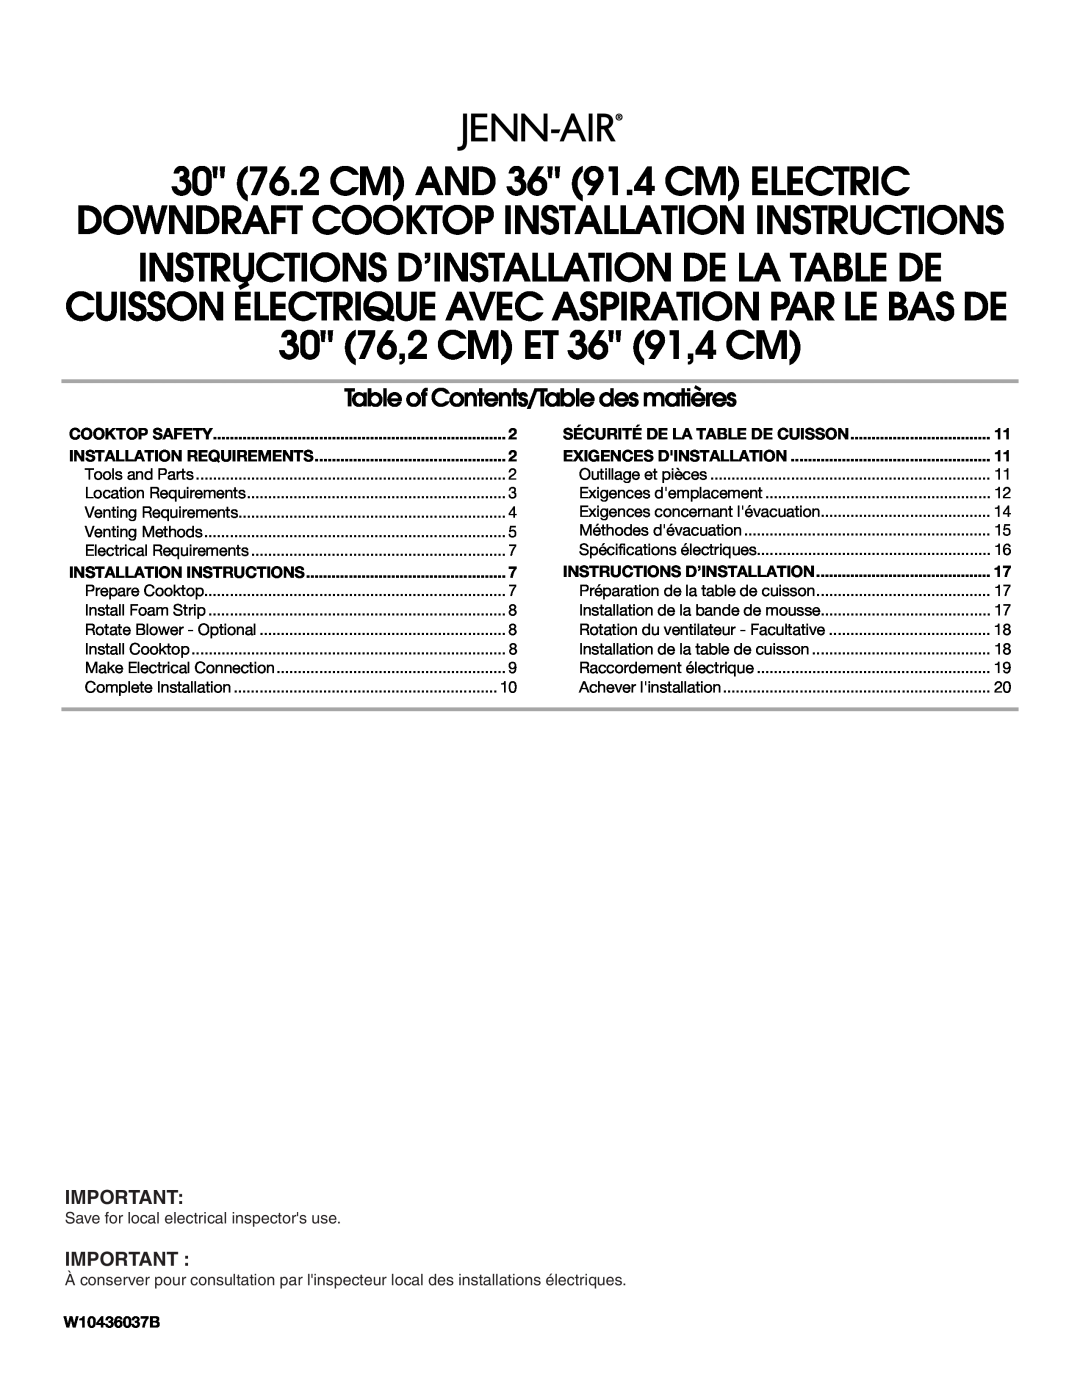 Jenn-Air W10436037B installation instructions Cooktop Safety, Installation Requirements, Installation Instructions 